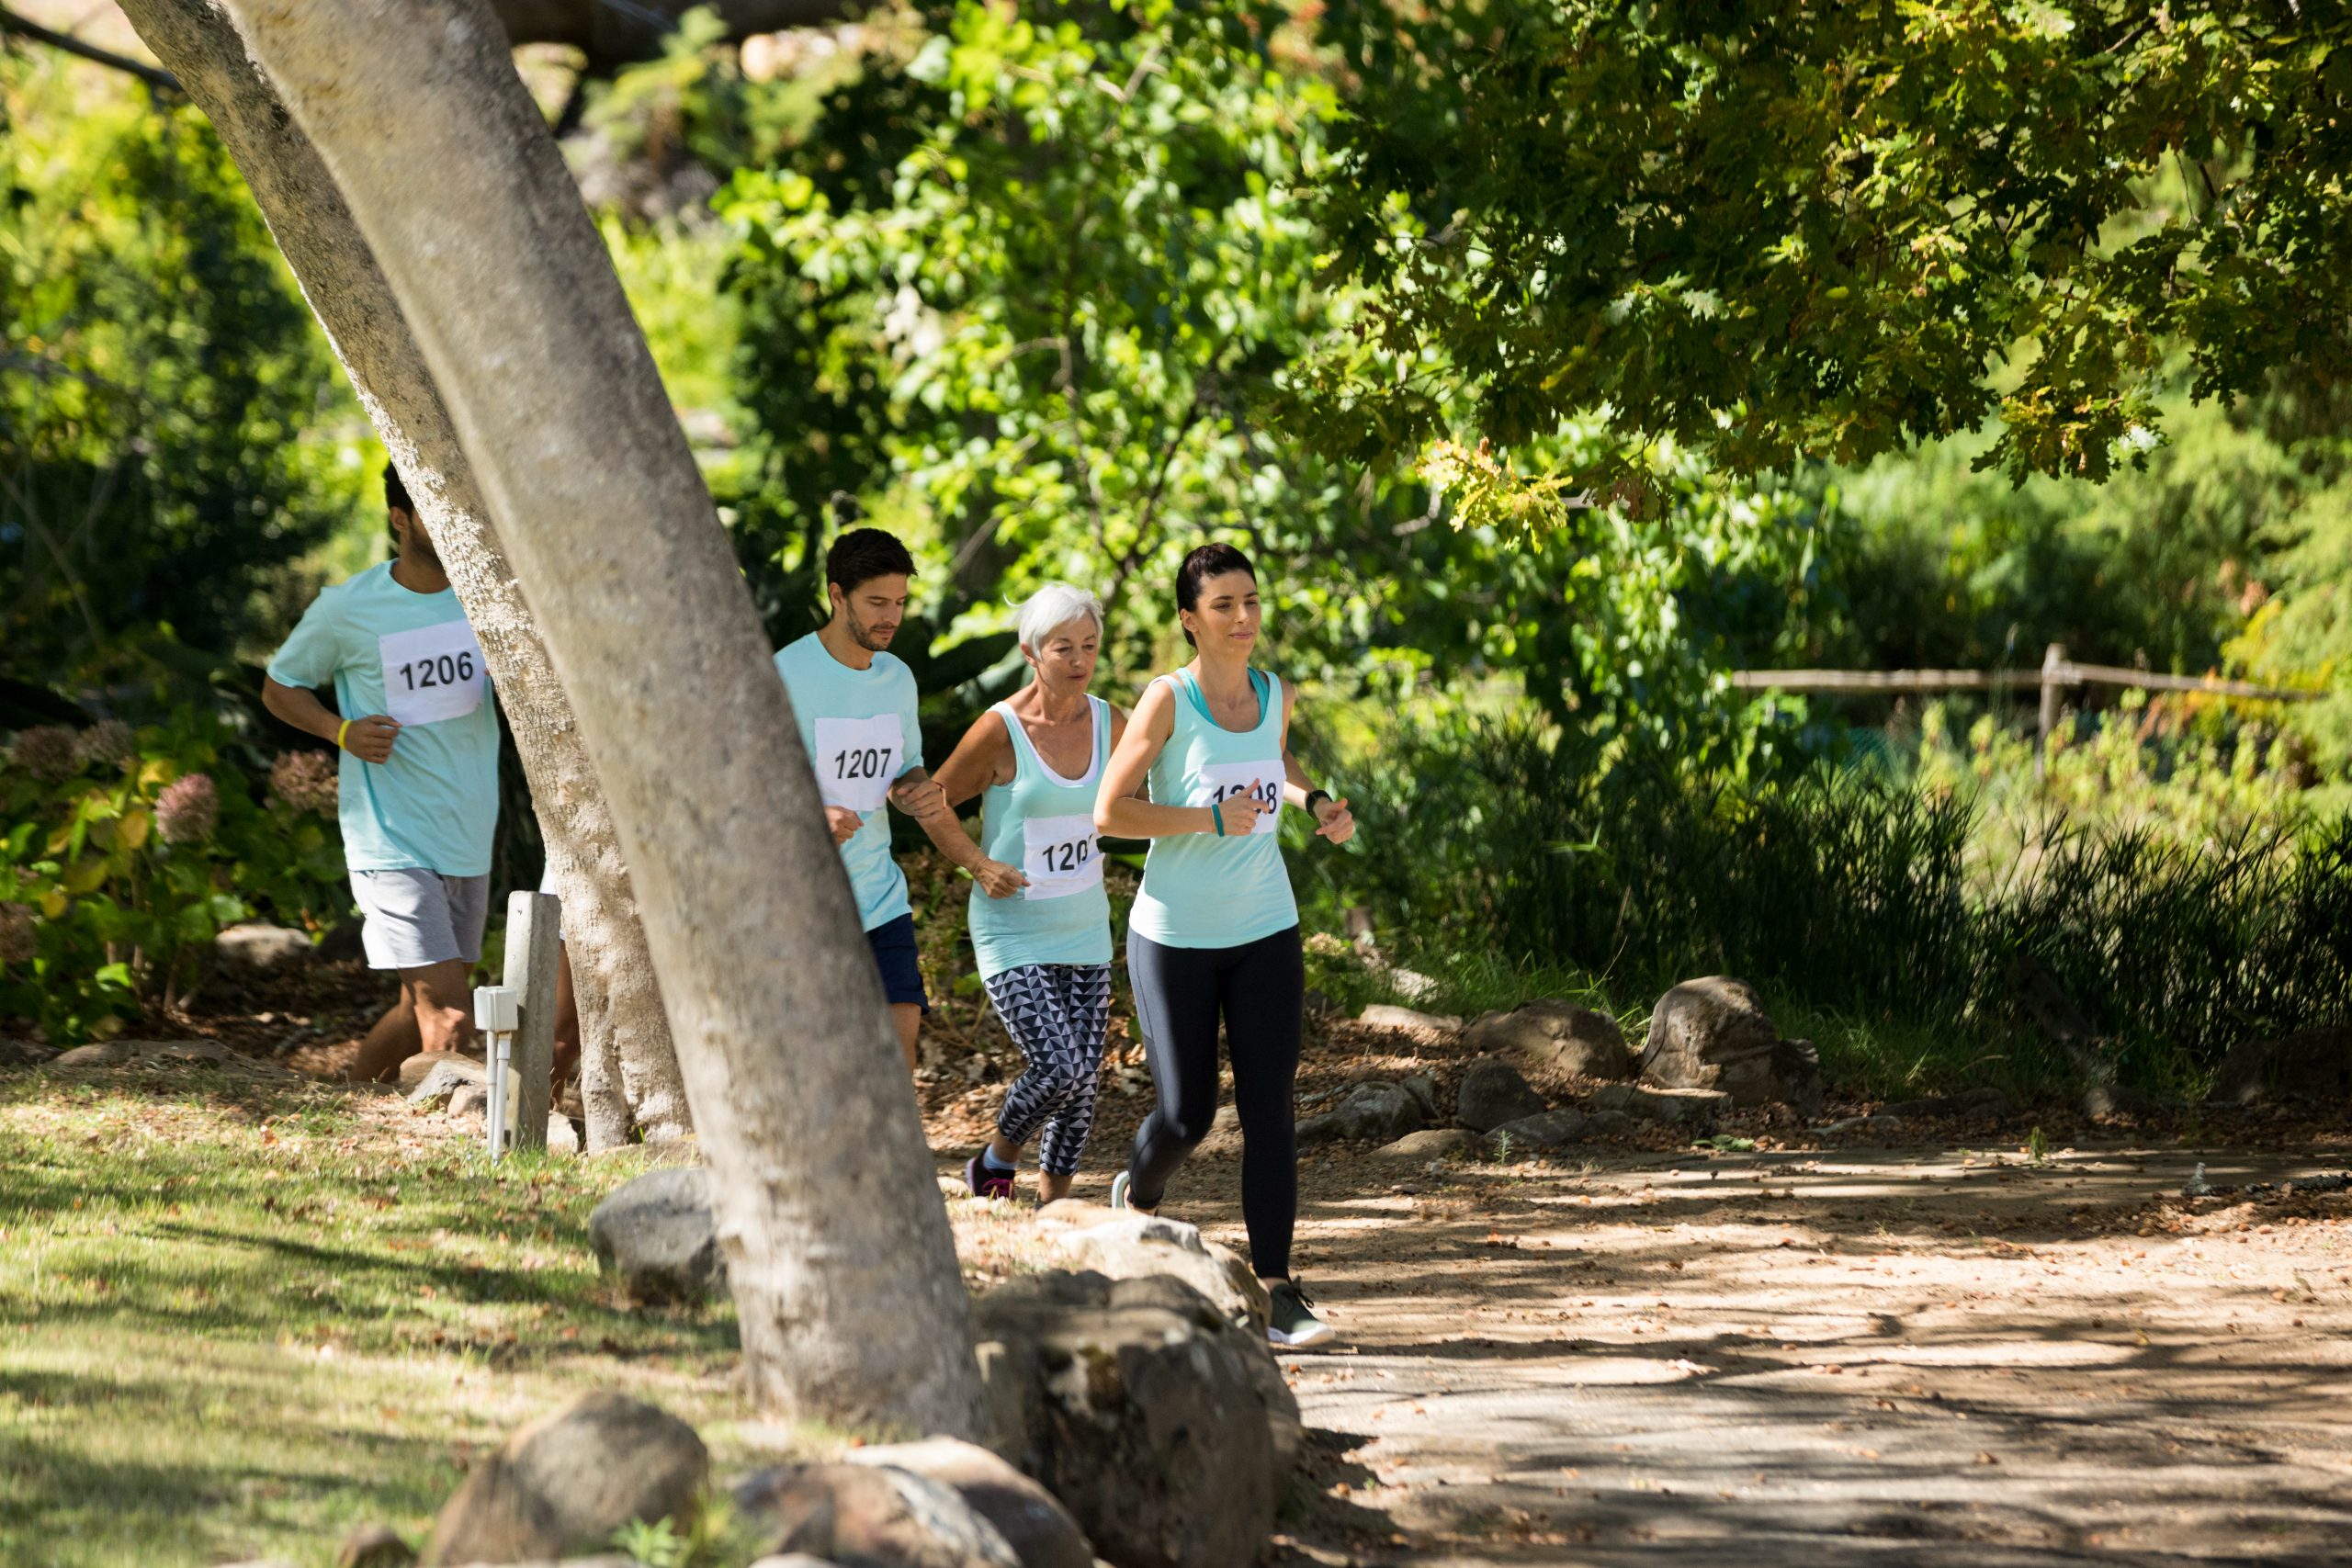 Determined marathon athletes running in the park